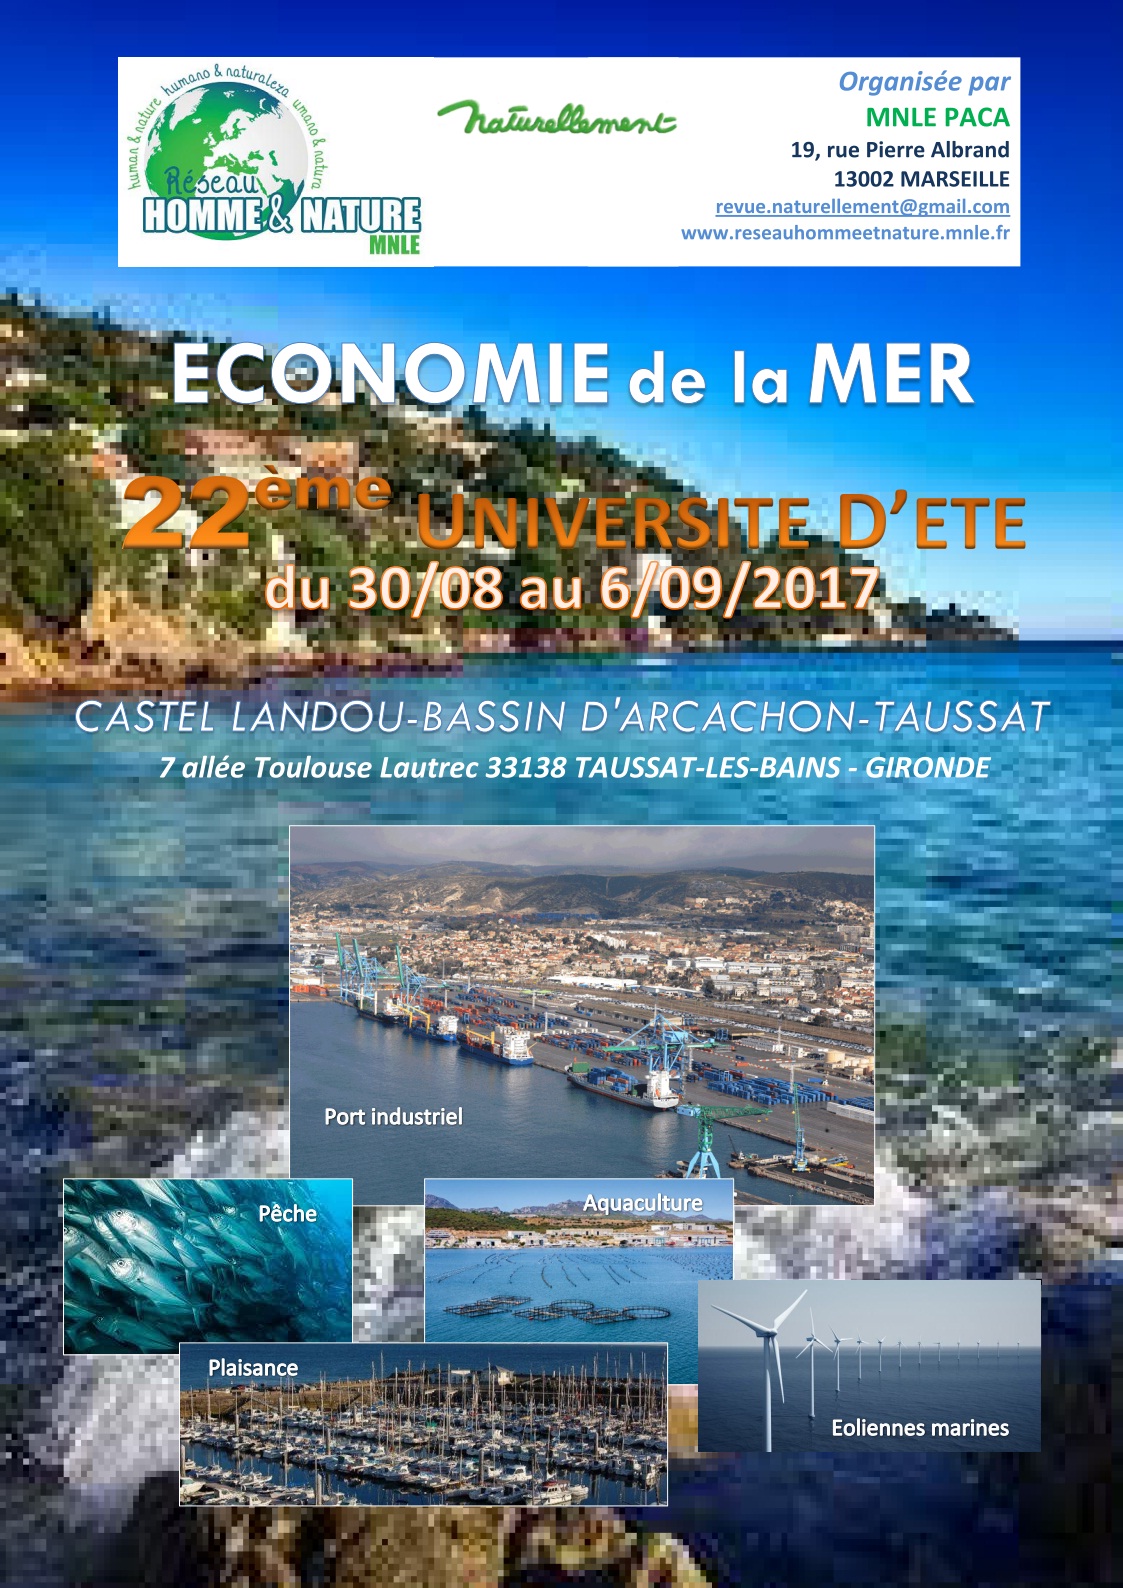 Agenda : Economie de la mer, prenez date !